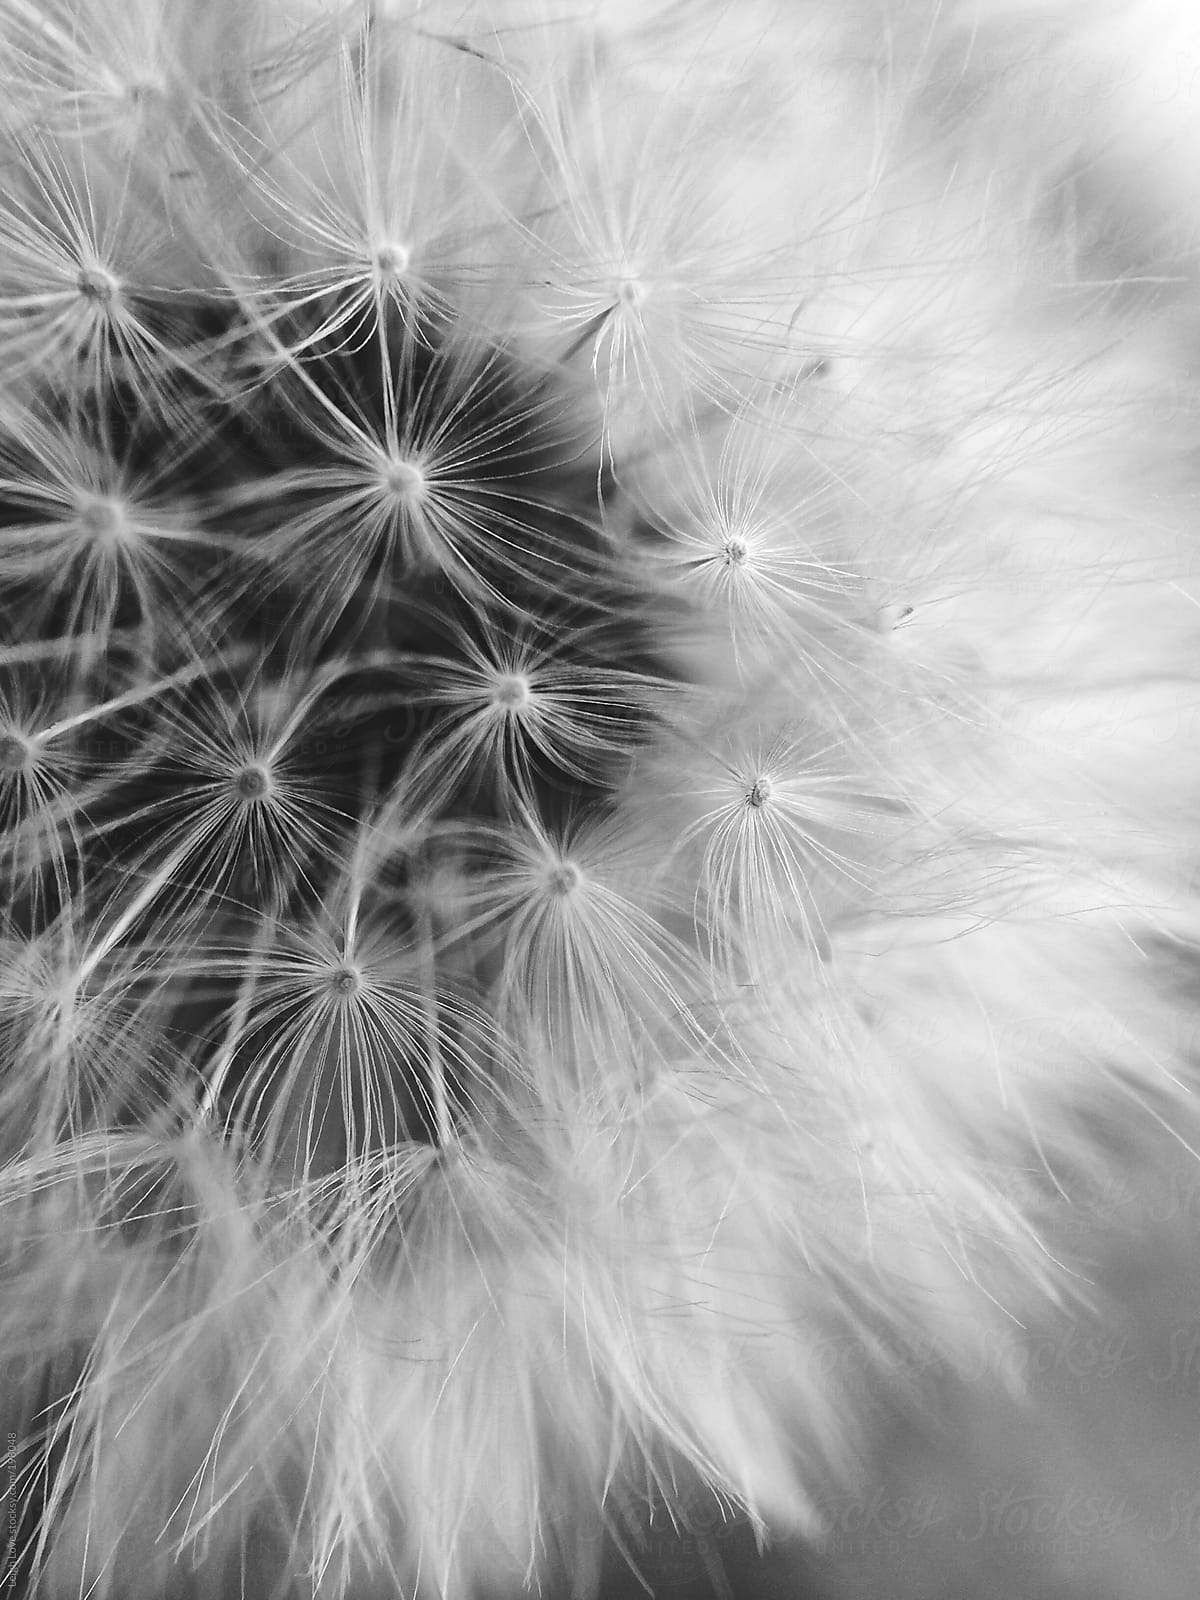 Closeup of A Dandelion